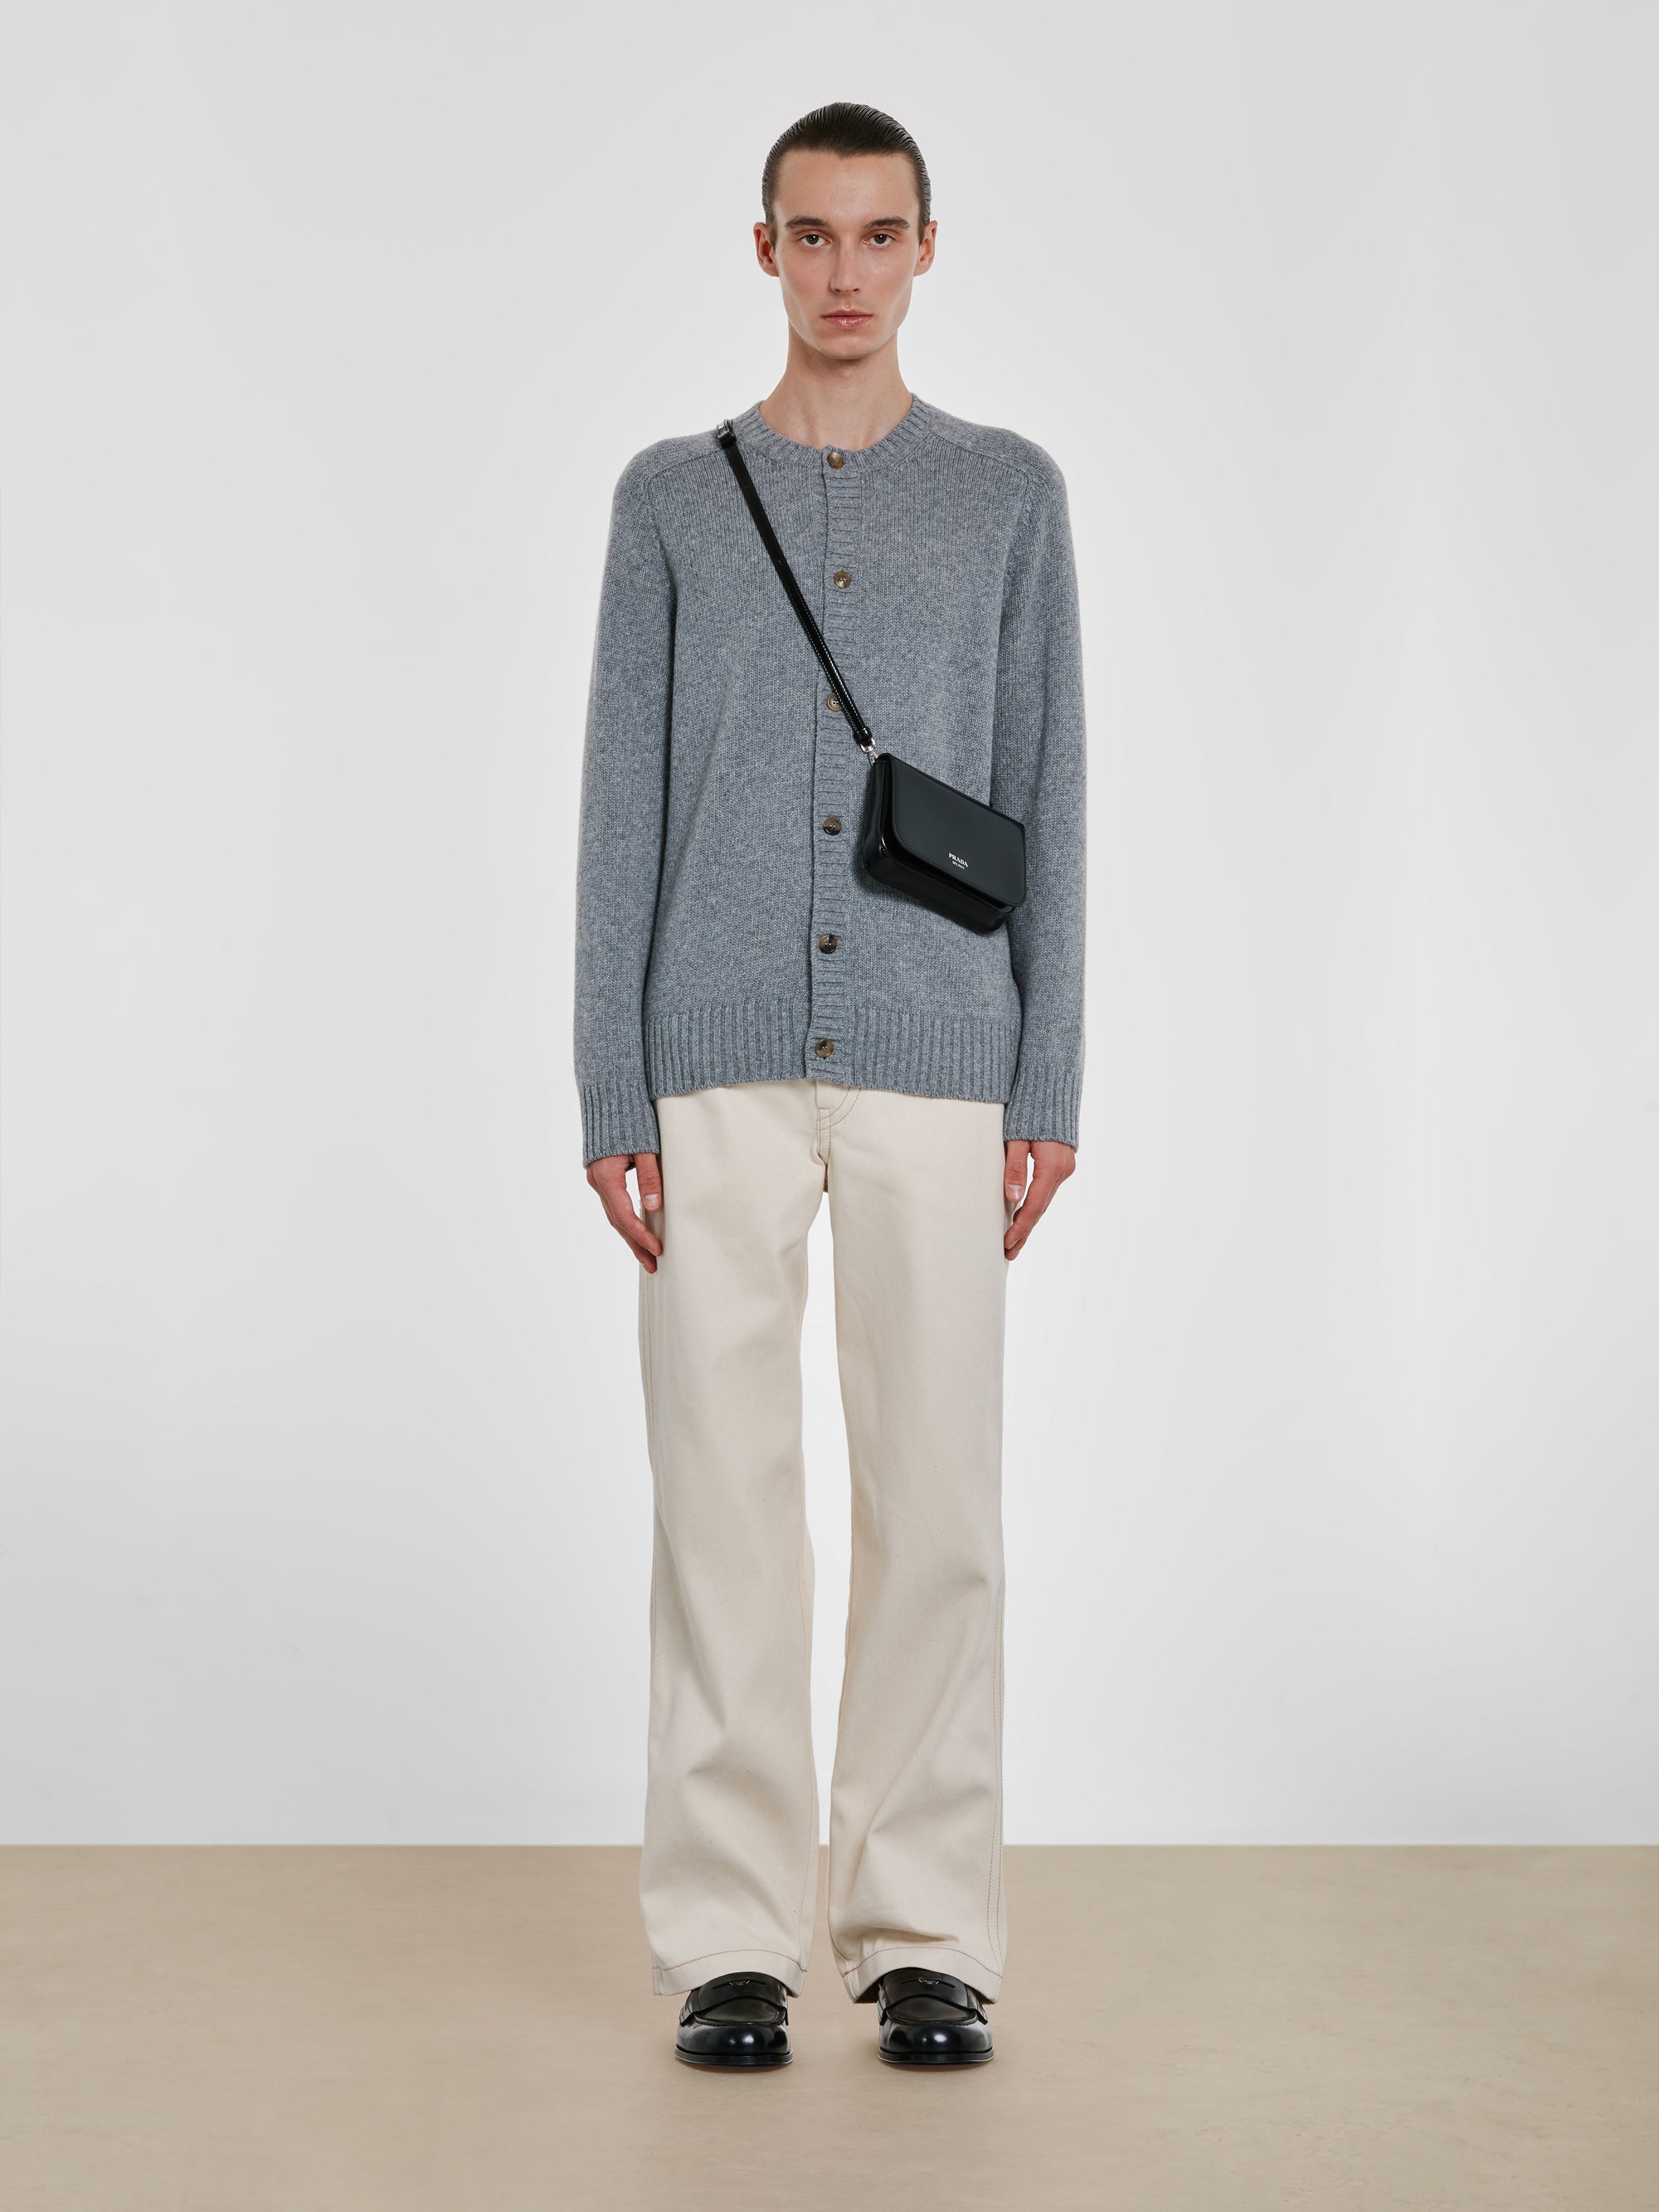 Prada - Men’s Wool and Cashmere Cardigan - (Grey) view 4